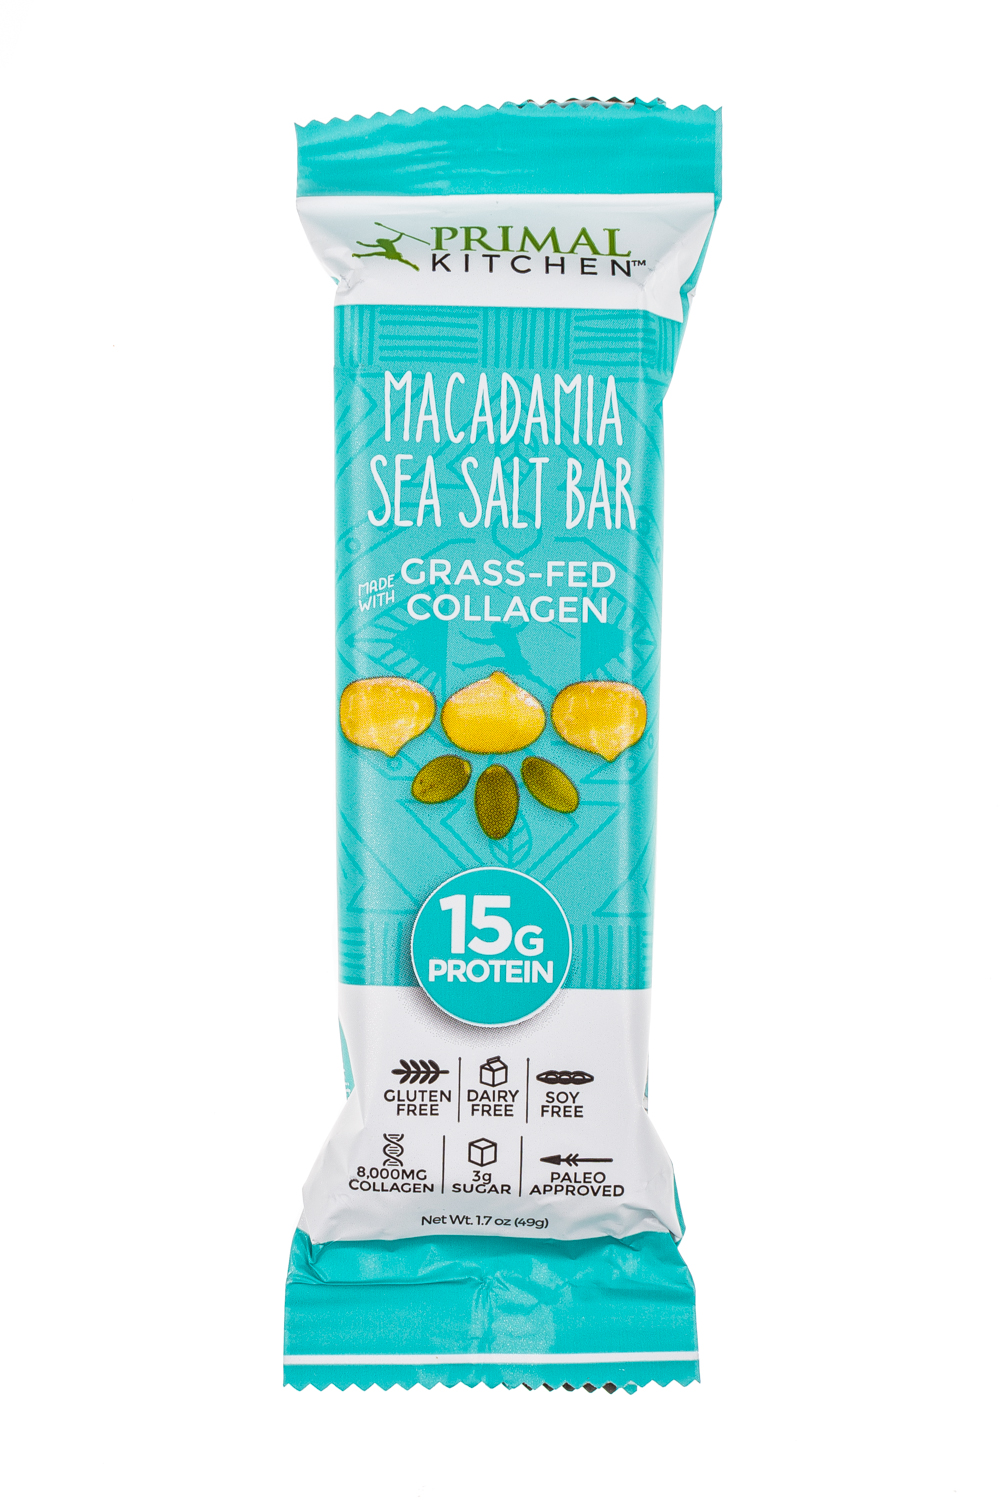 Macadamia Sea Salt Bar